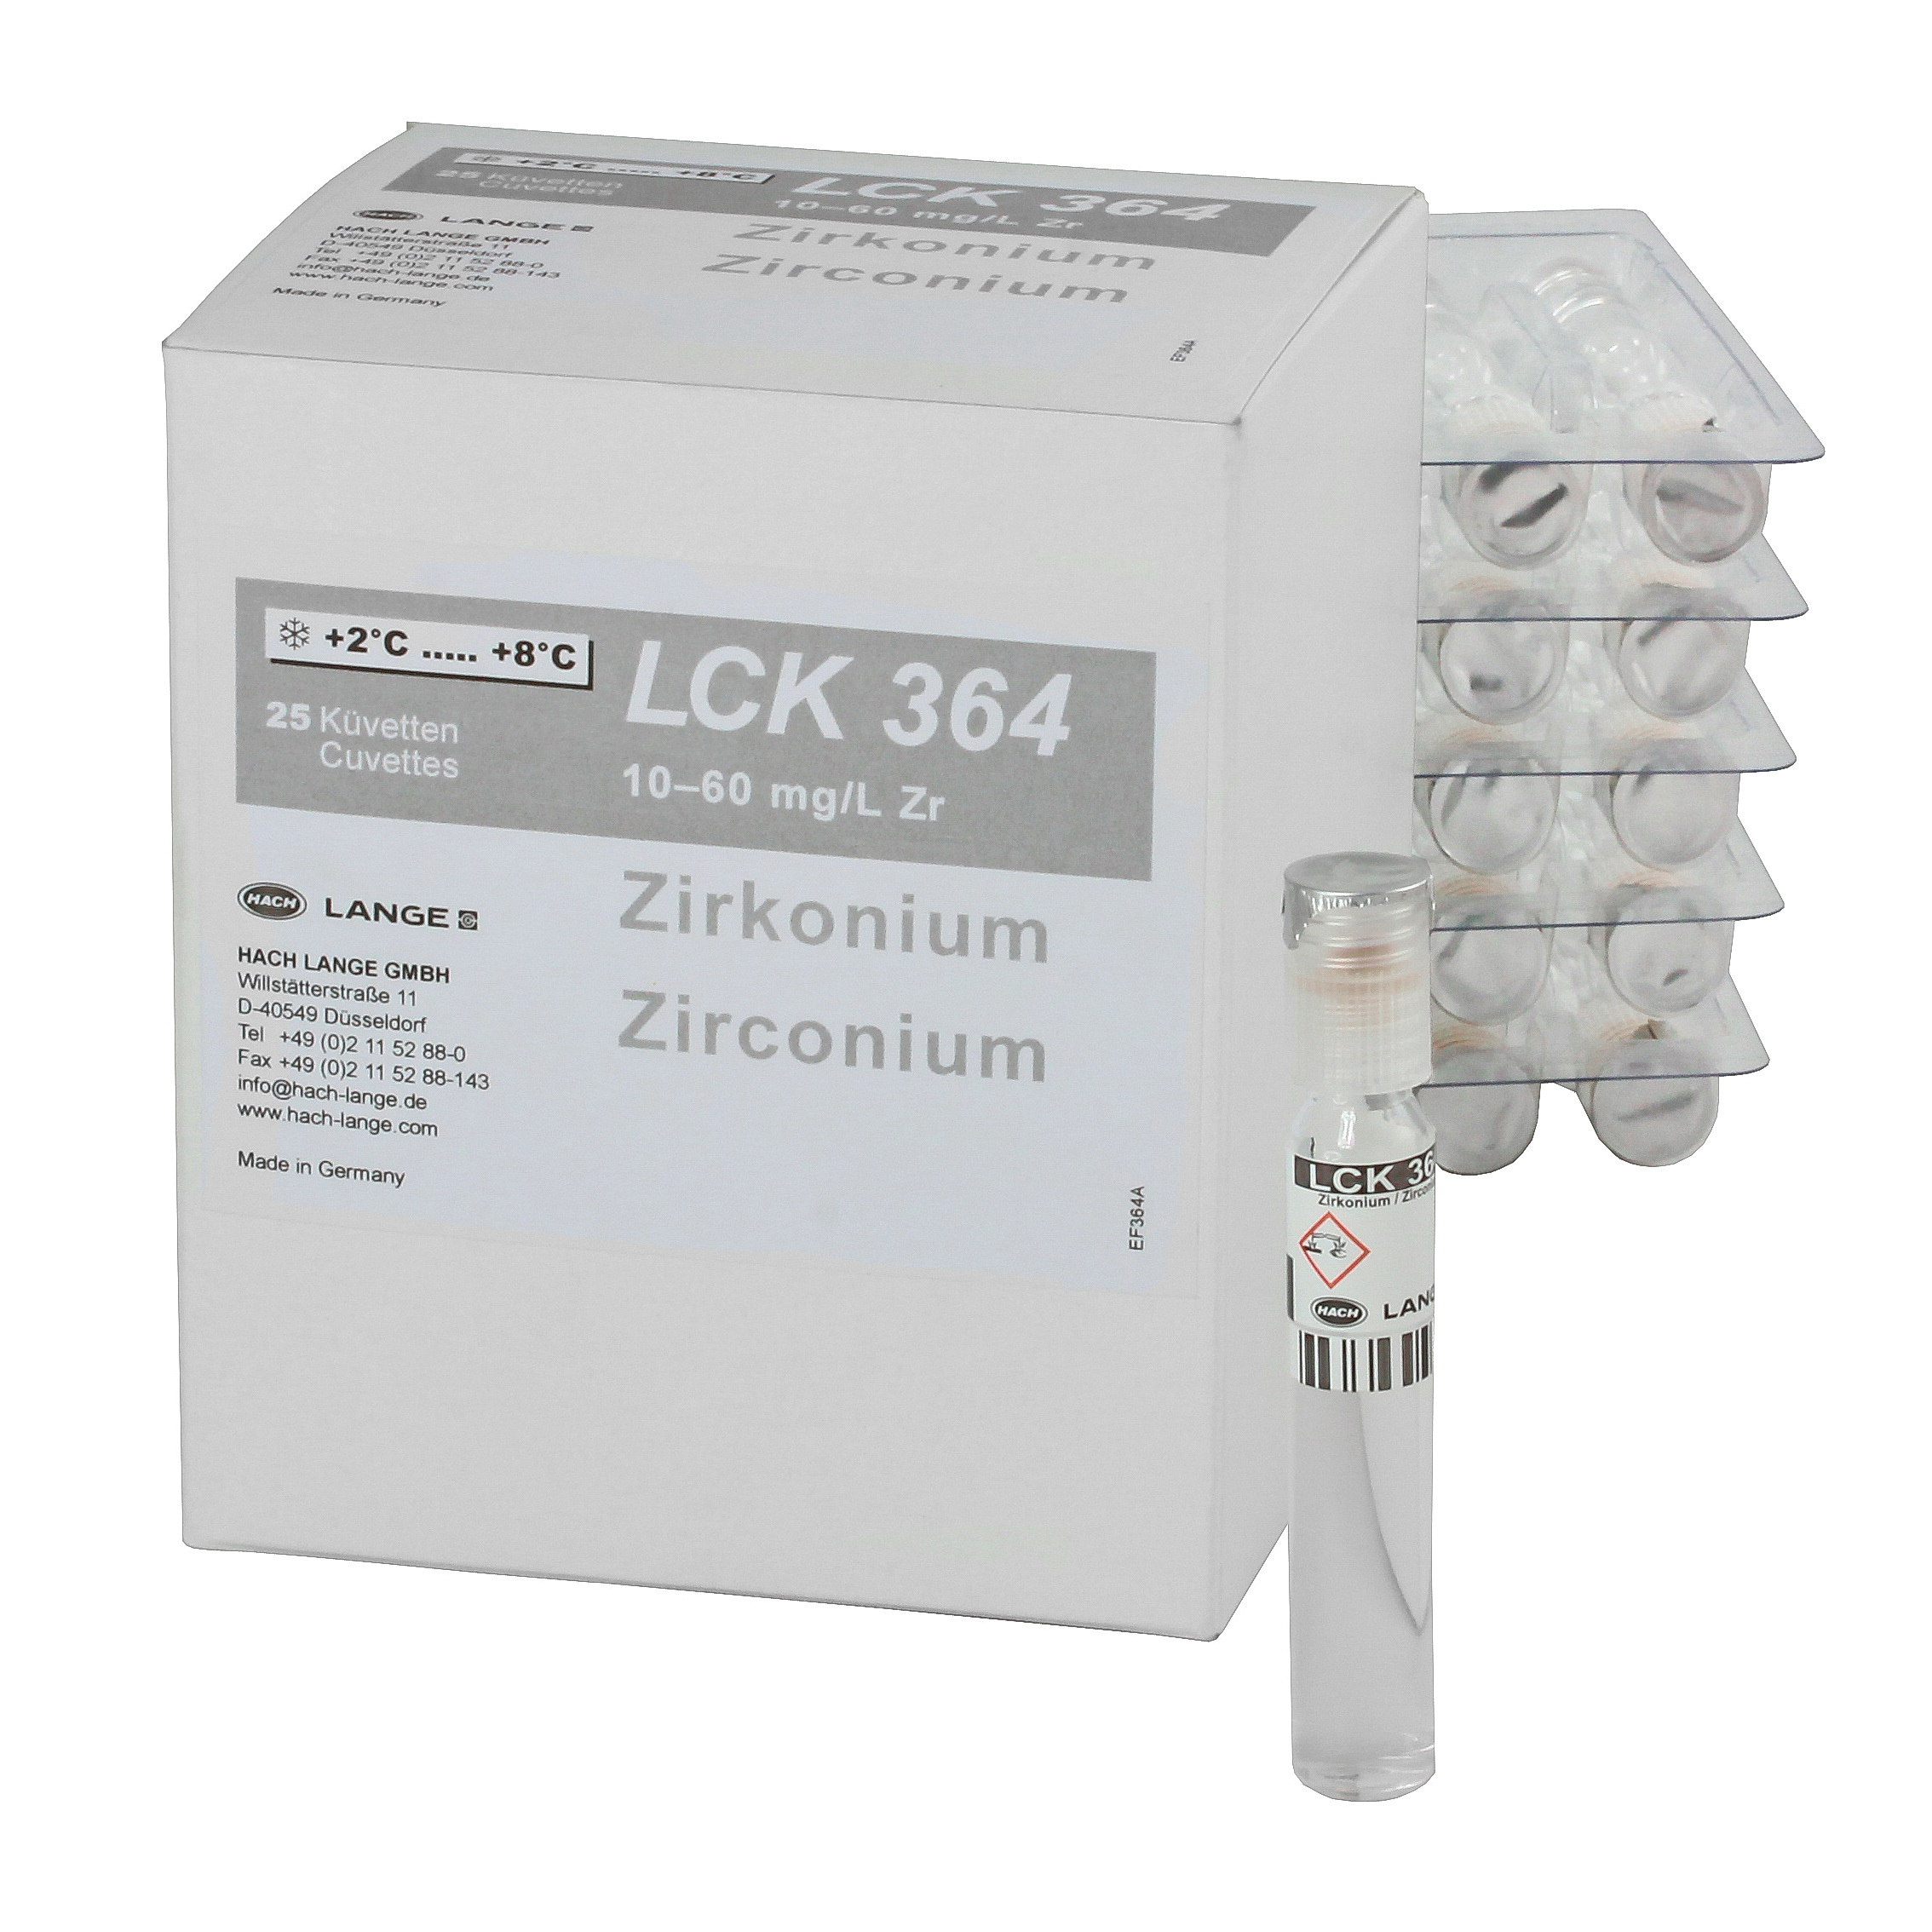 NOVINKA: Nový kyvetový test LCK364 Zirkonium